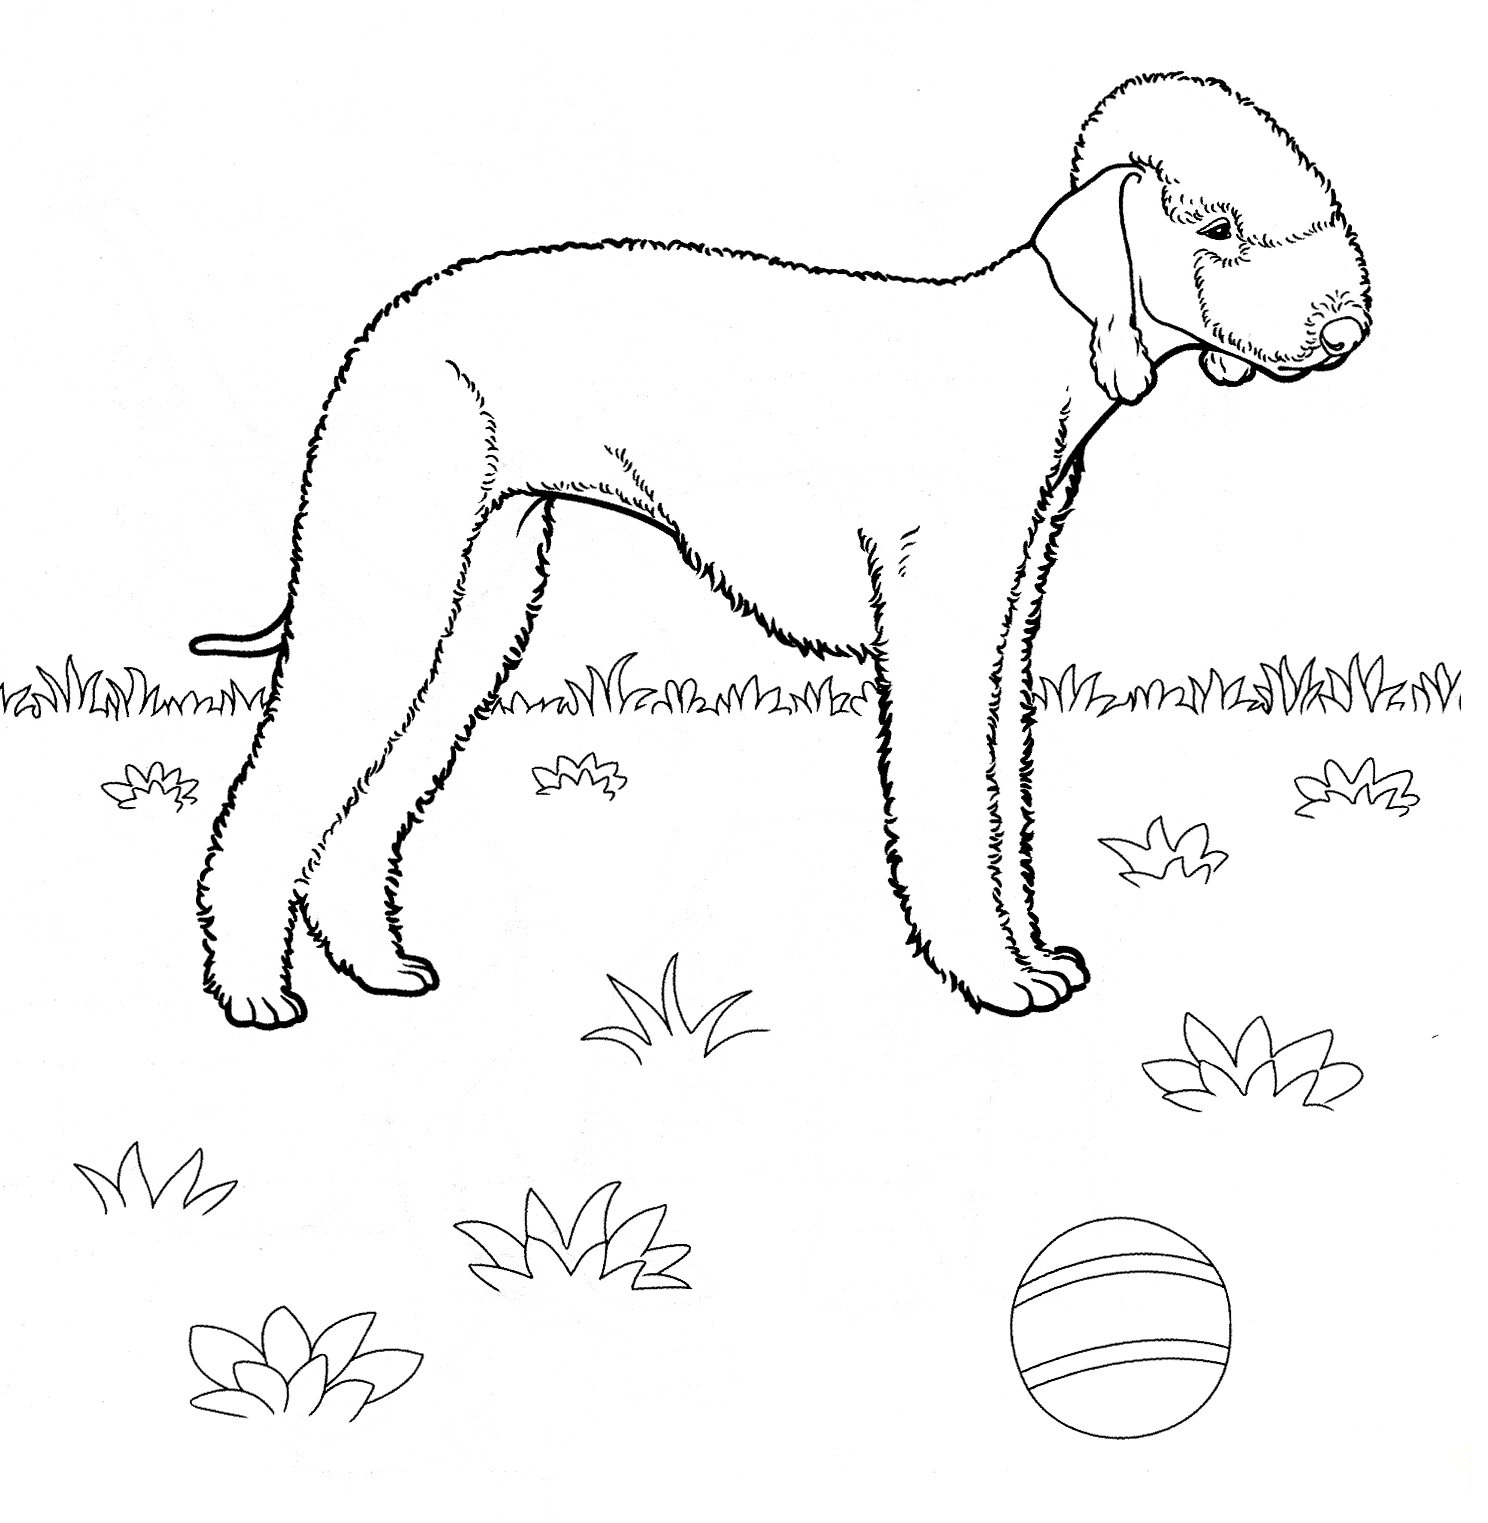 Bedlington Terrier da Cani